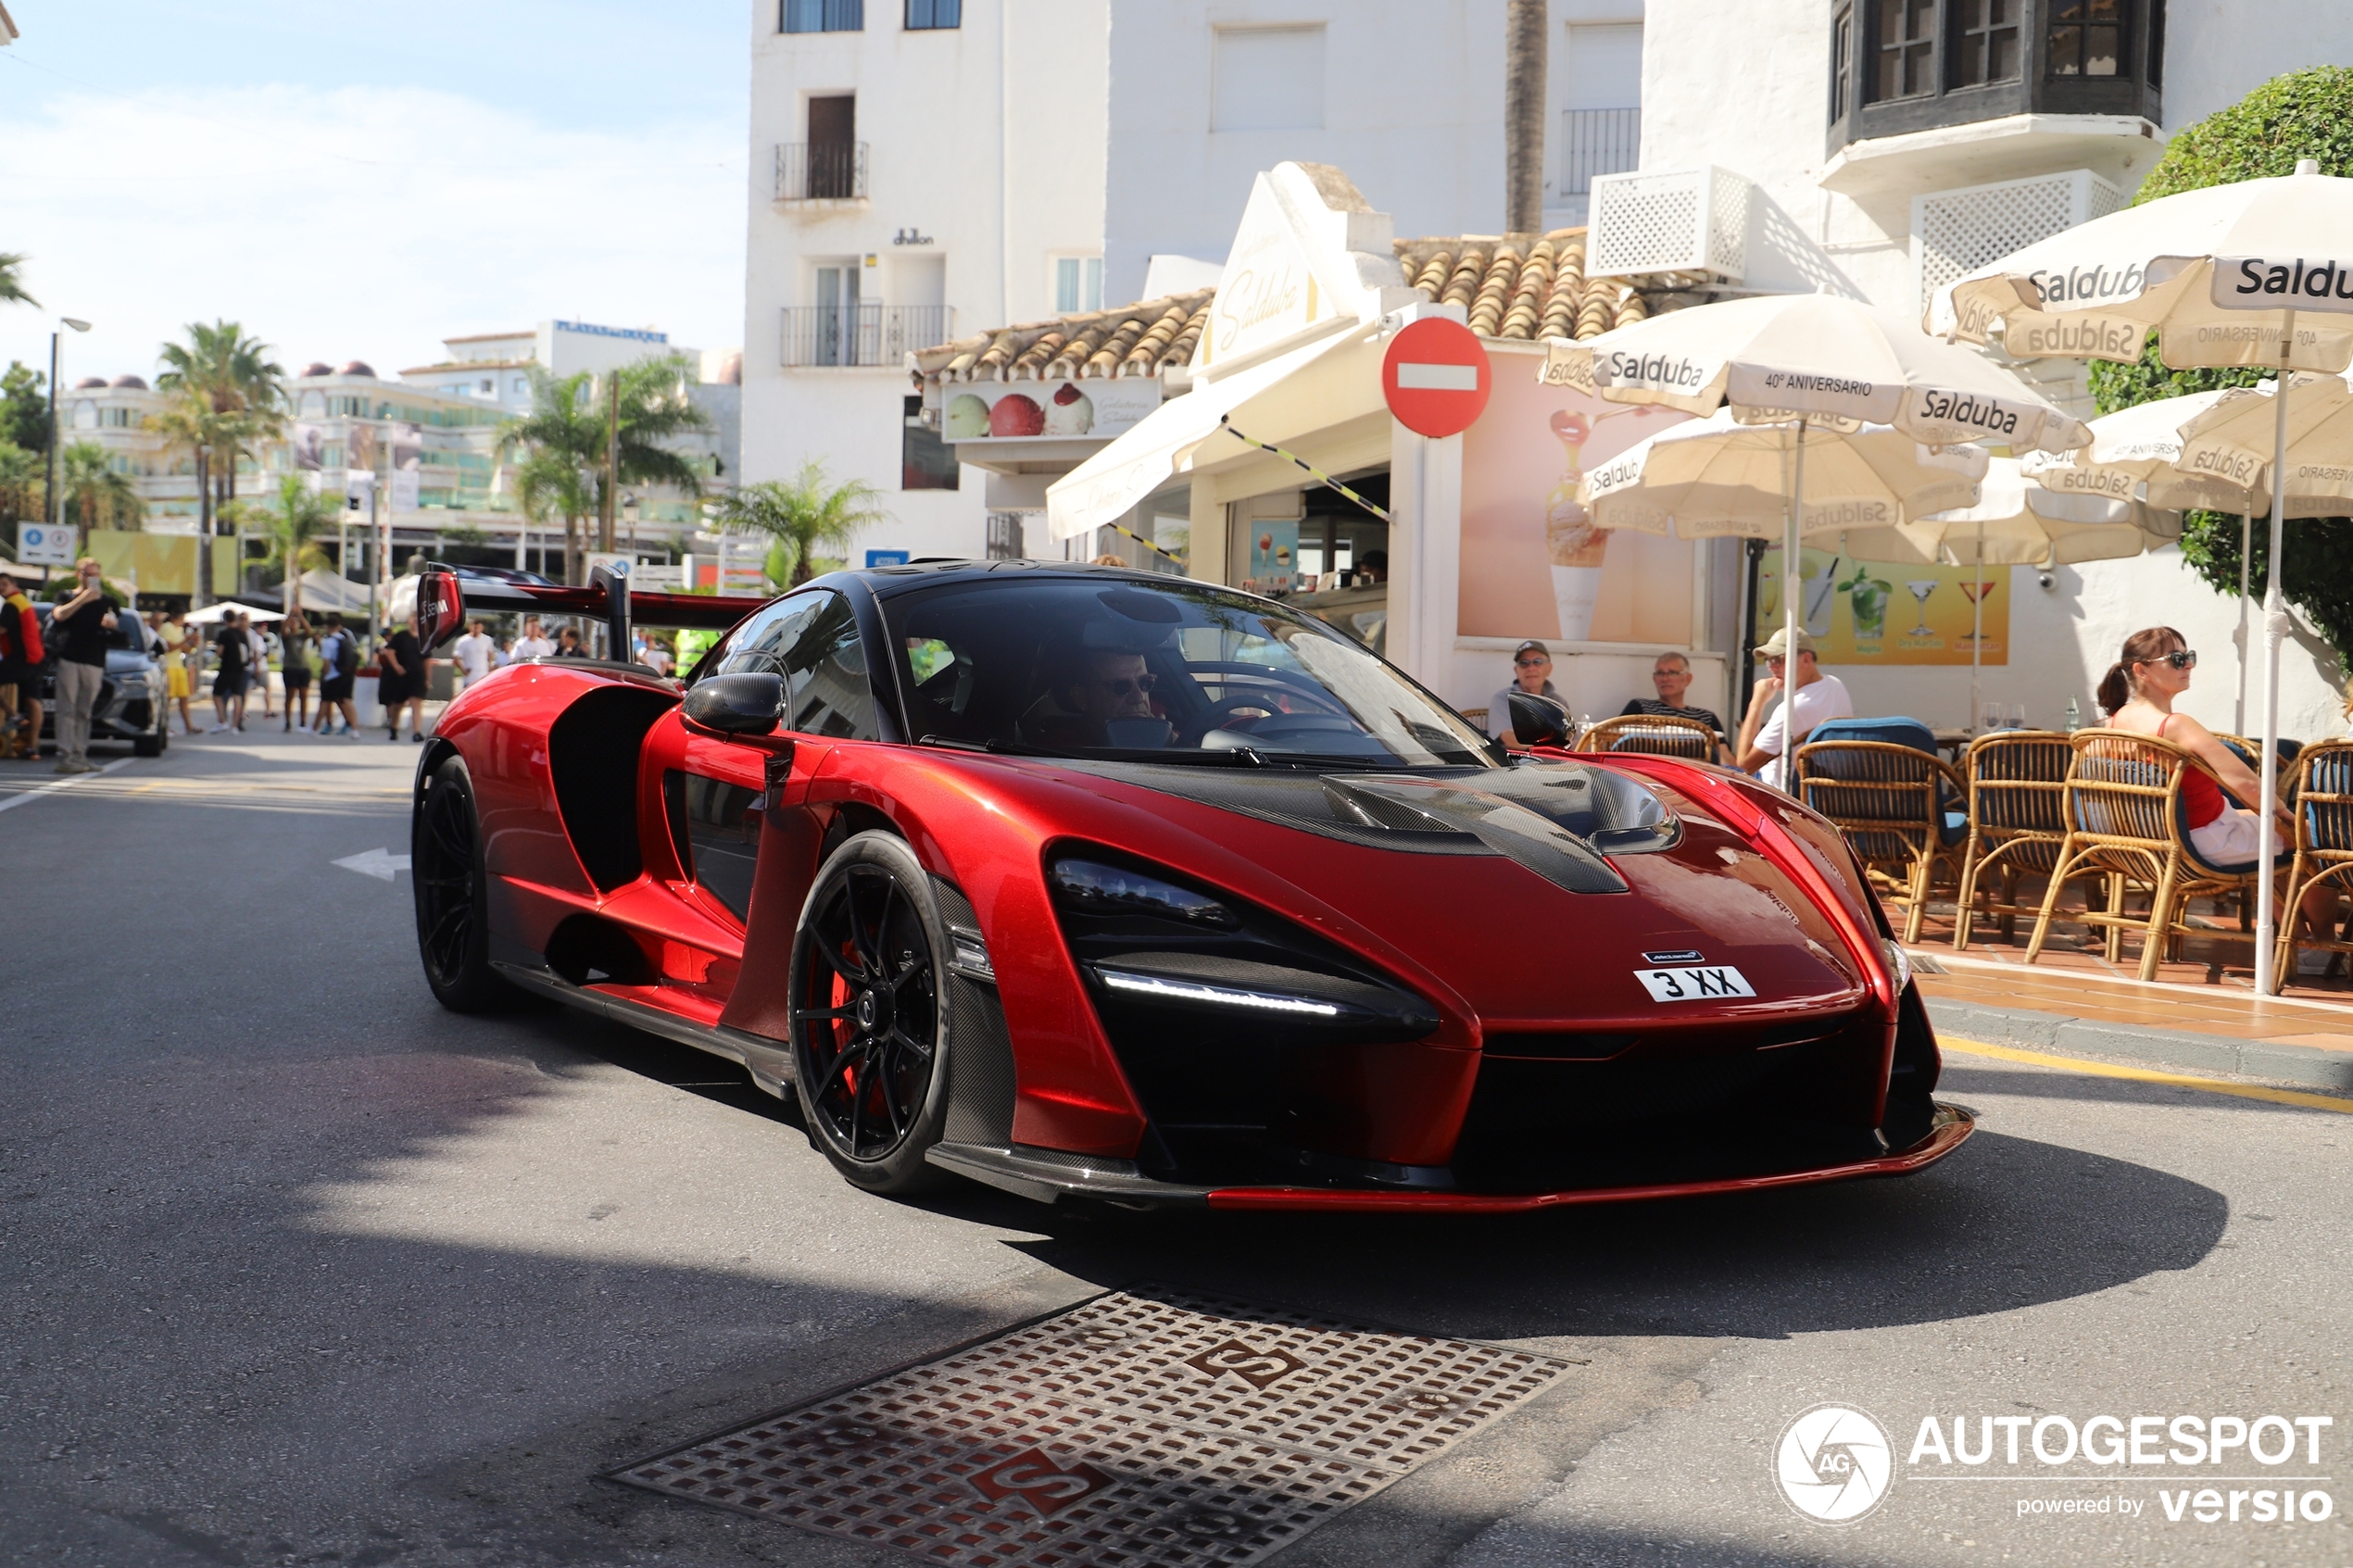 An impressive McLaren Senna makes an appearance in Marbella